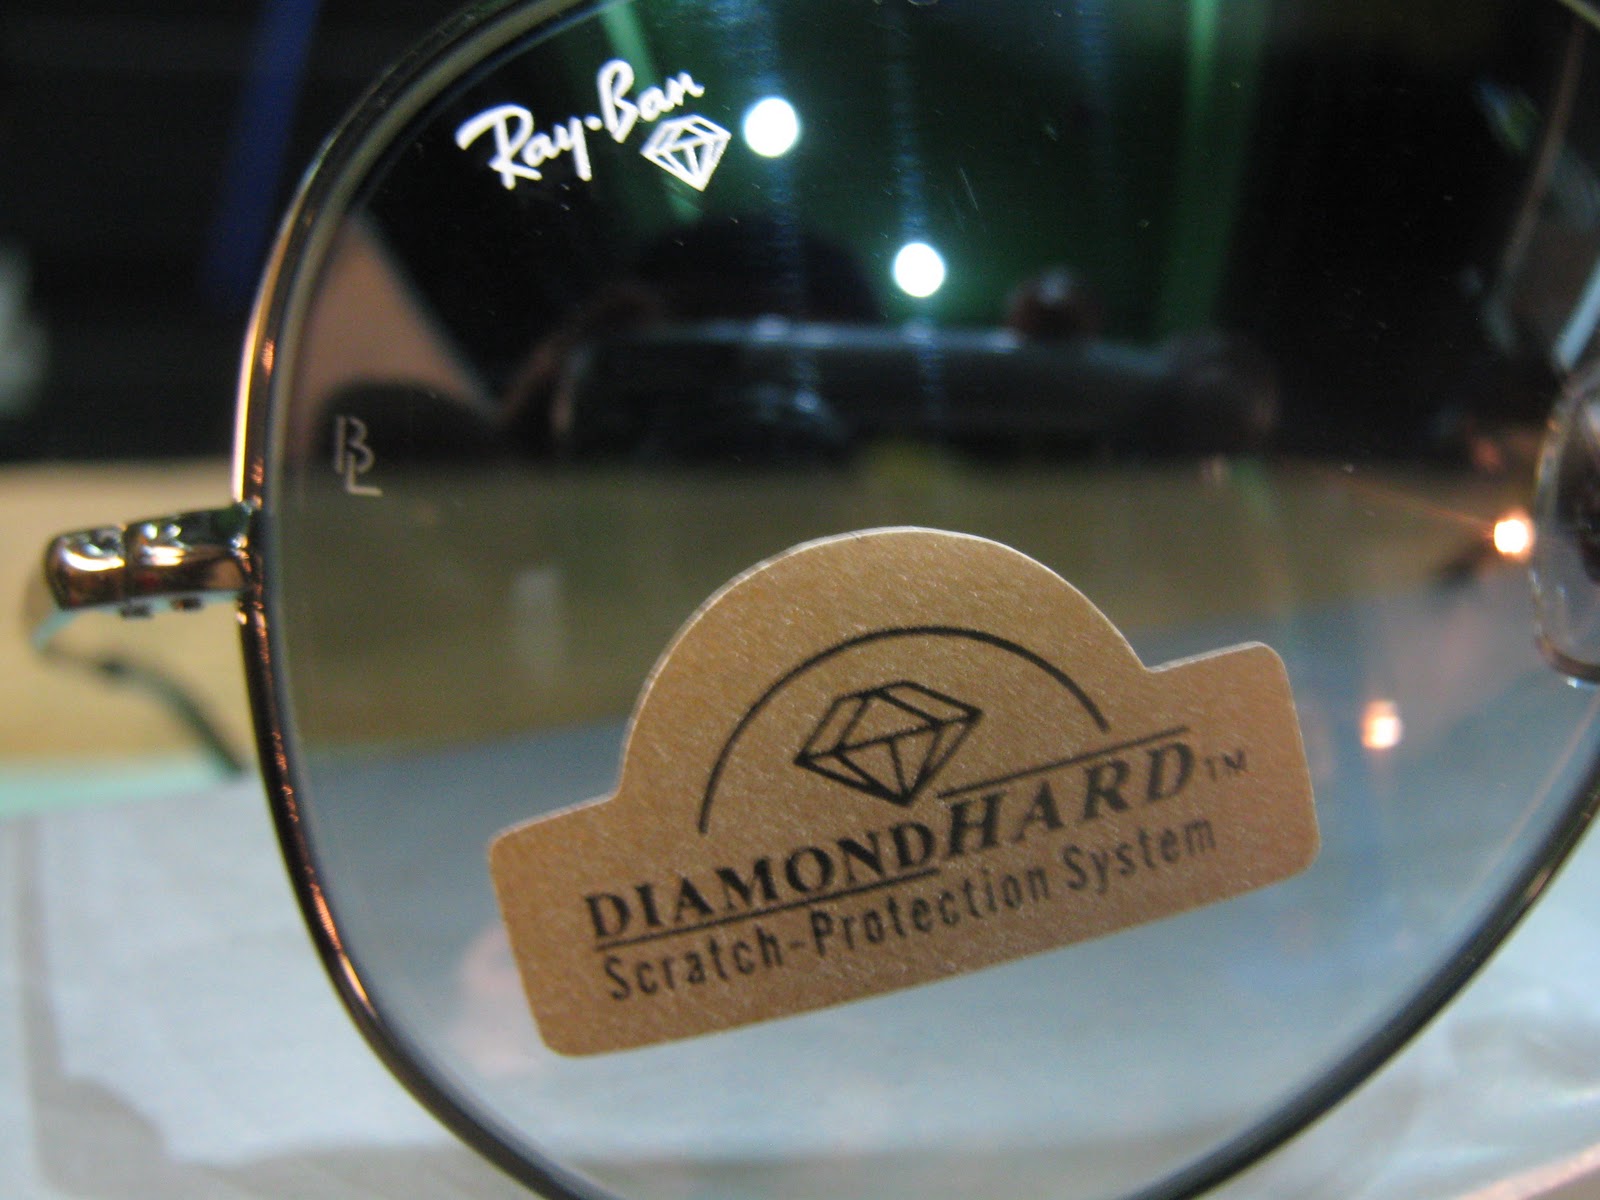 ray ban sunglasses with diamond logo